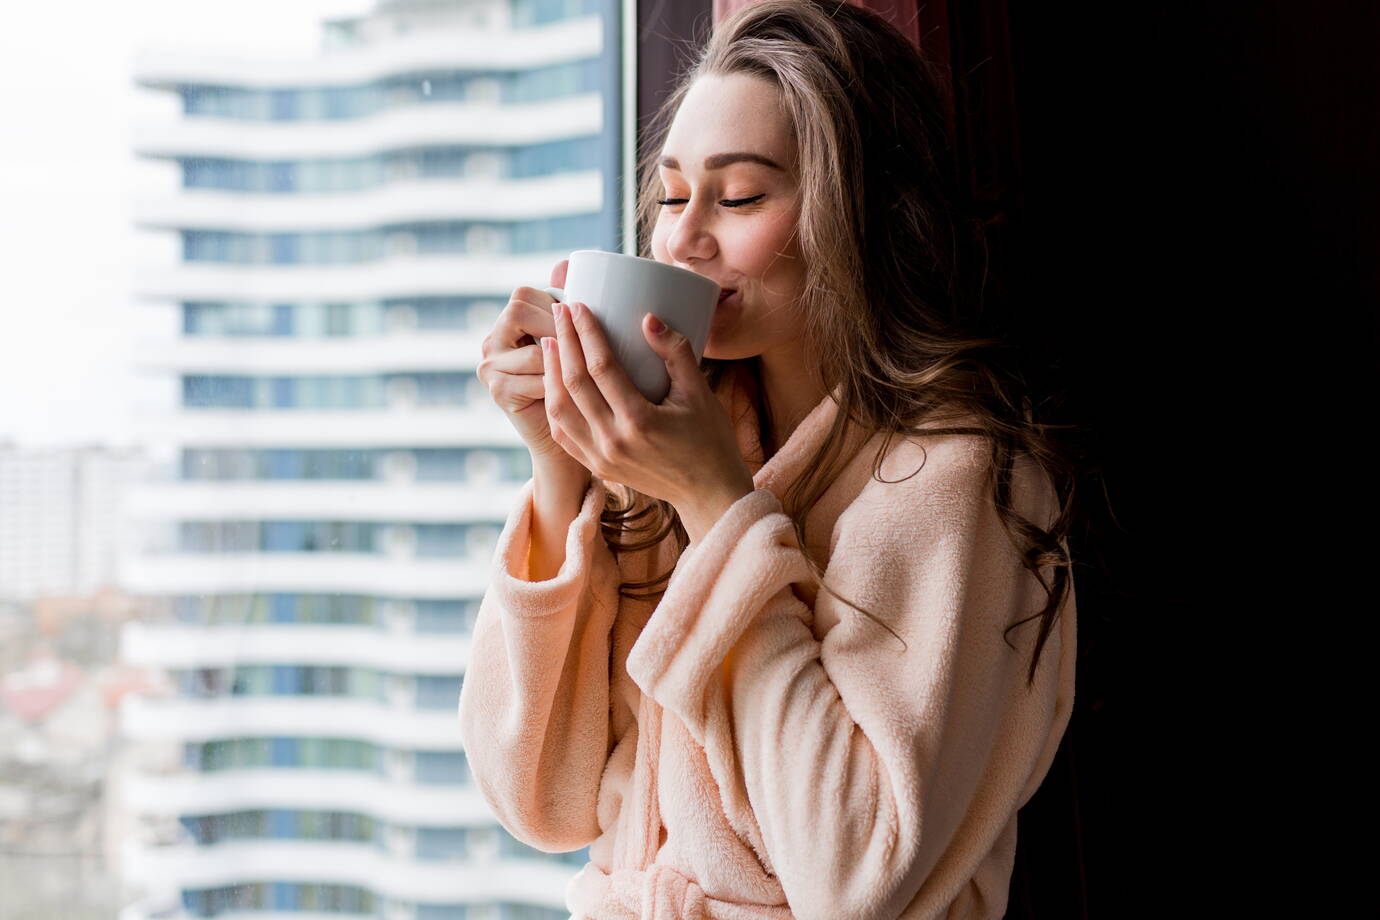 fresh-young-woman-pink-tender-bathrobe-drink-tea-looking-out-window.jpg